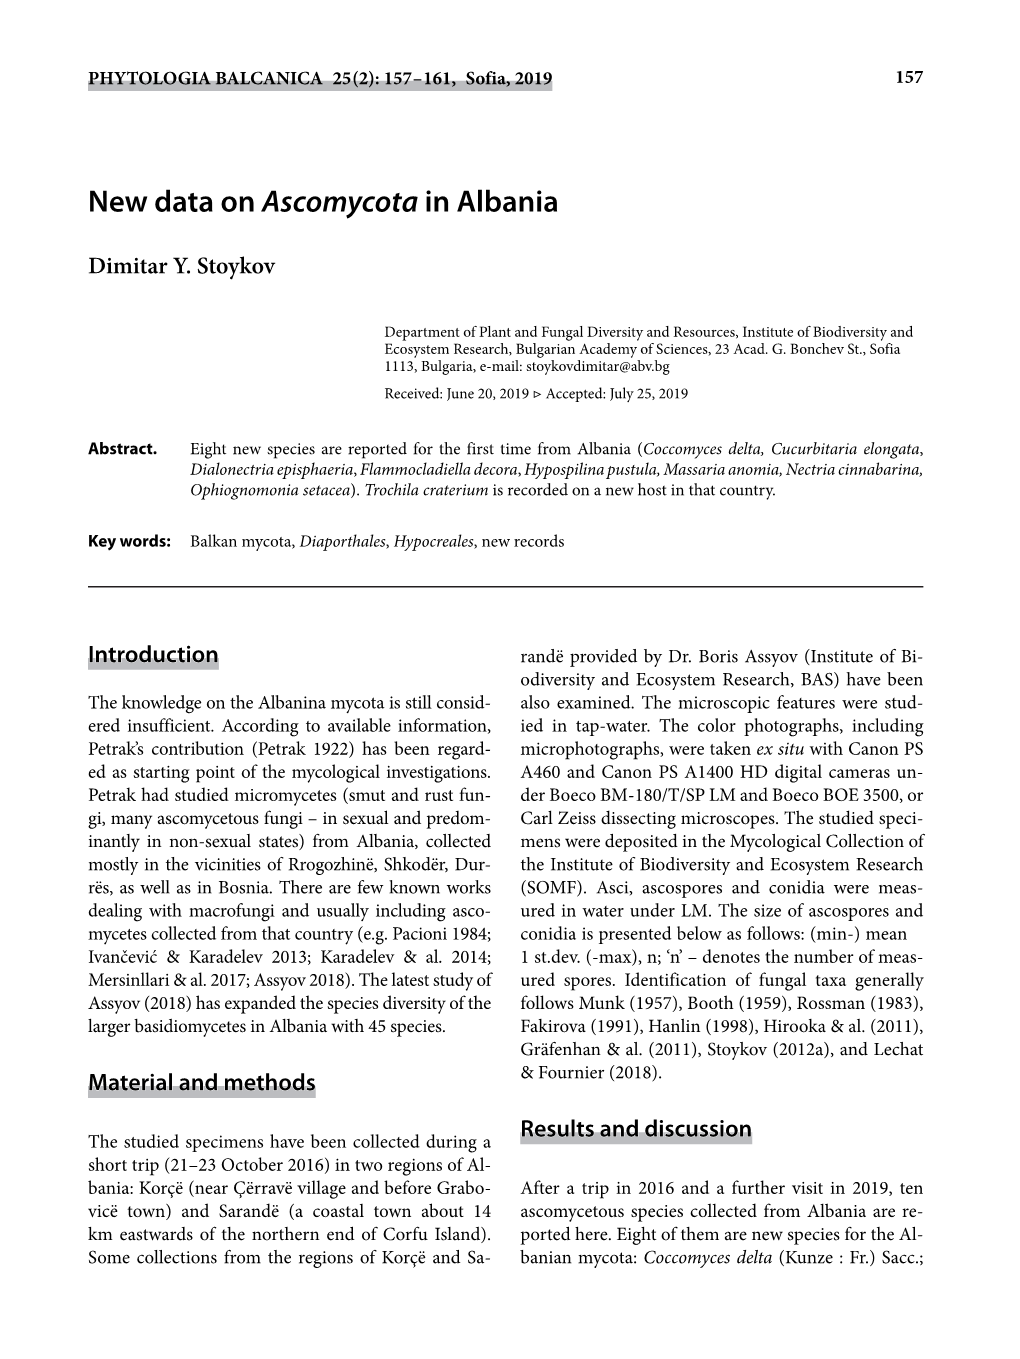 New Data on Ascomycota in Albania